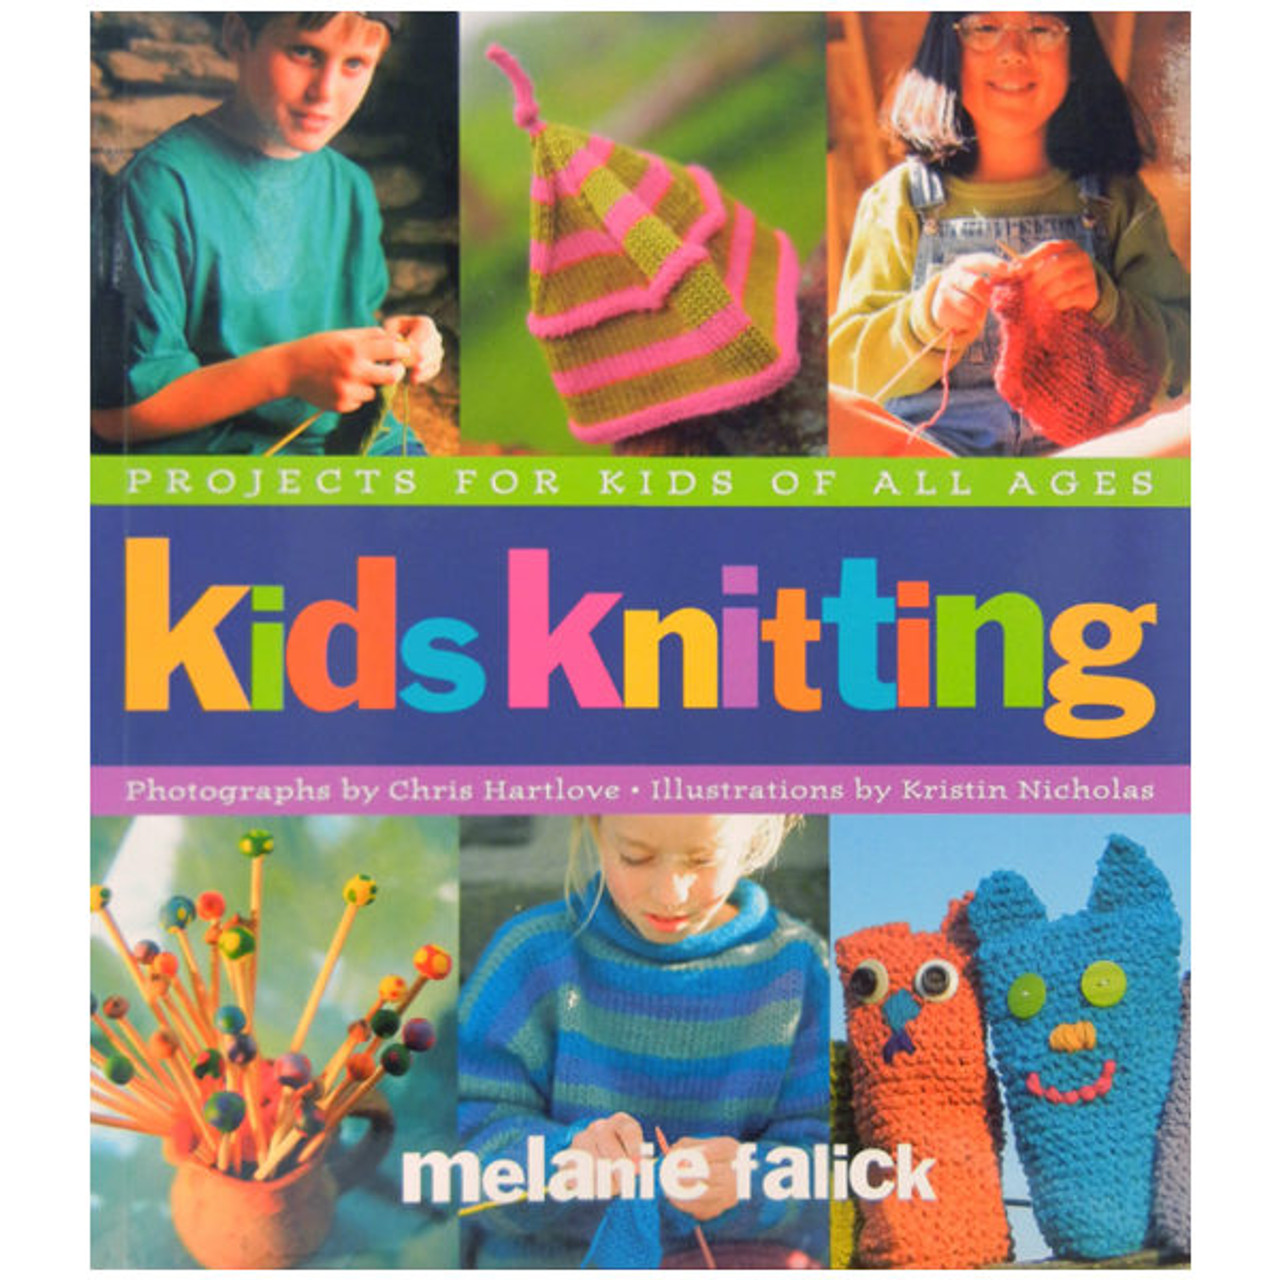 Kids Knitting by Melanie Falick - A Child's Dream